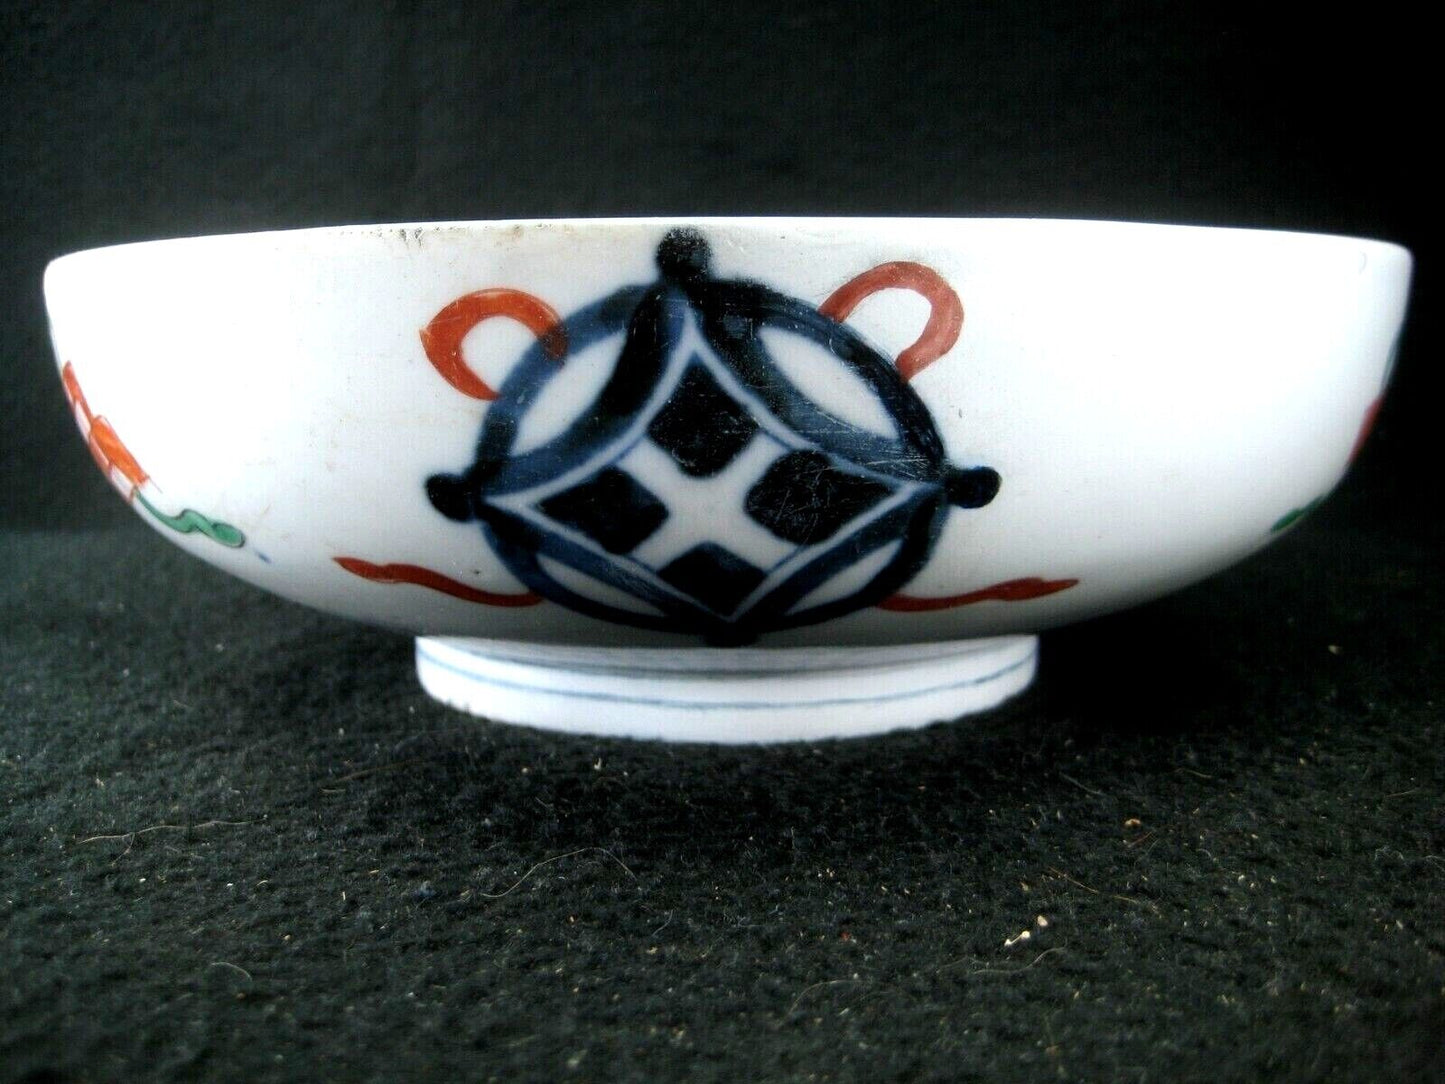 Antique Japanese Meiji 1800'S Imari Ceramic Bowl W/ Lake Boats & House 8"